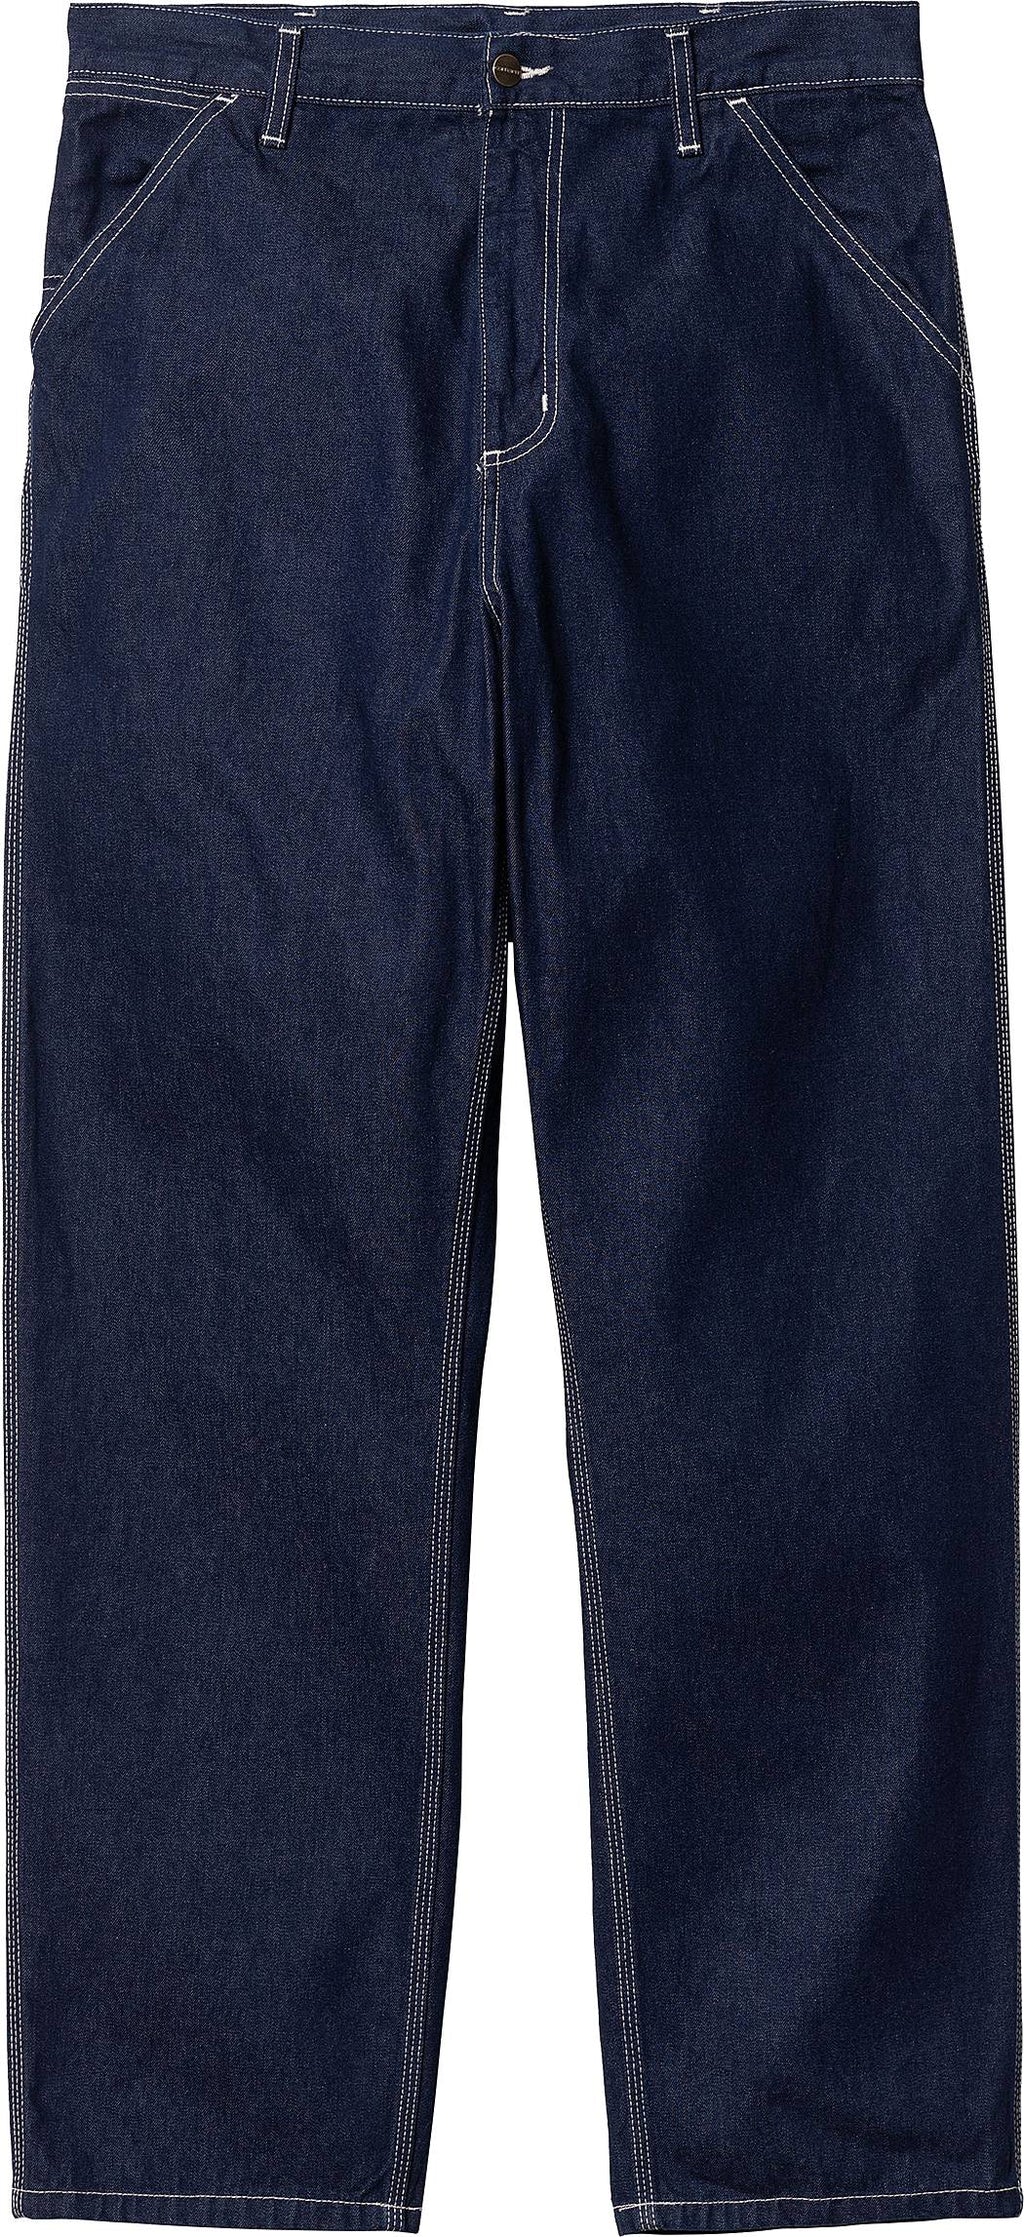  Carhartt Wip Pantaloni Jeans Simple Pant Blue One Wash Uomo - 2